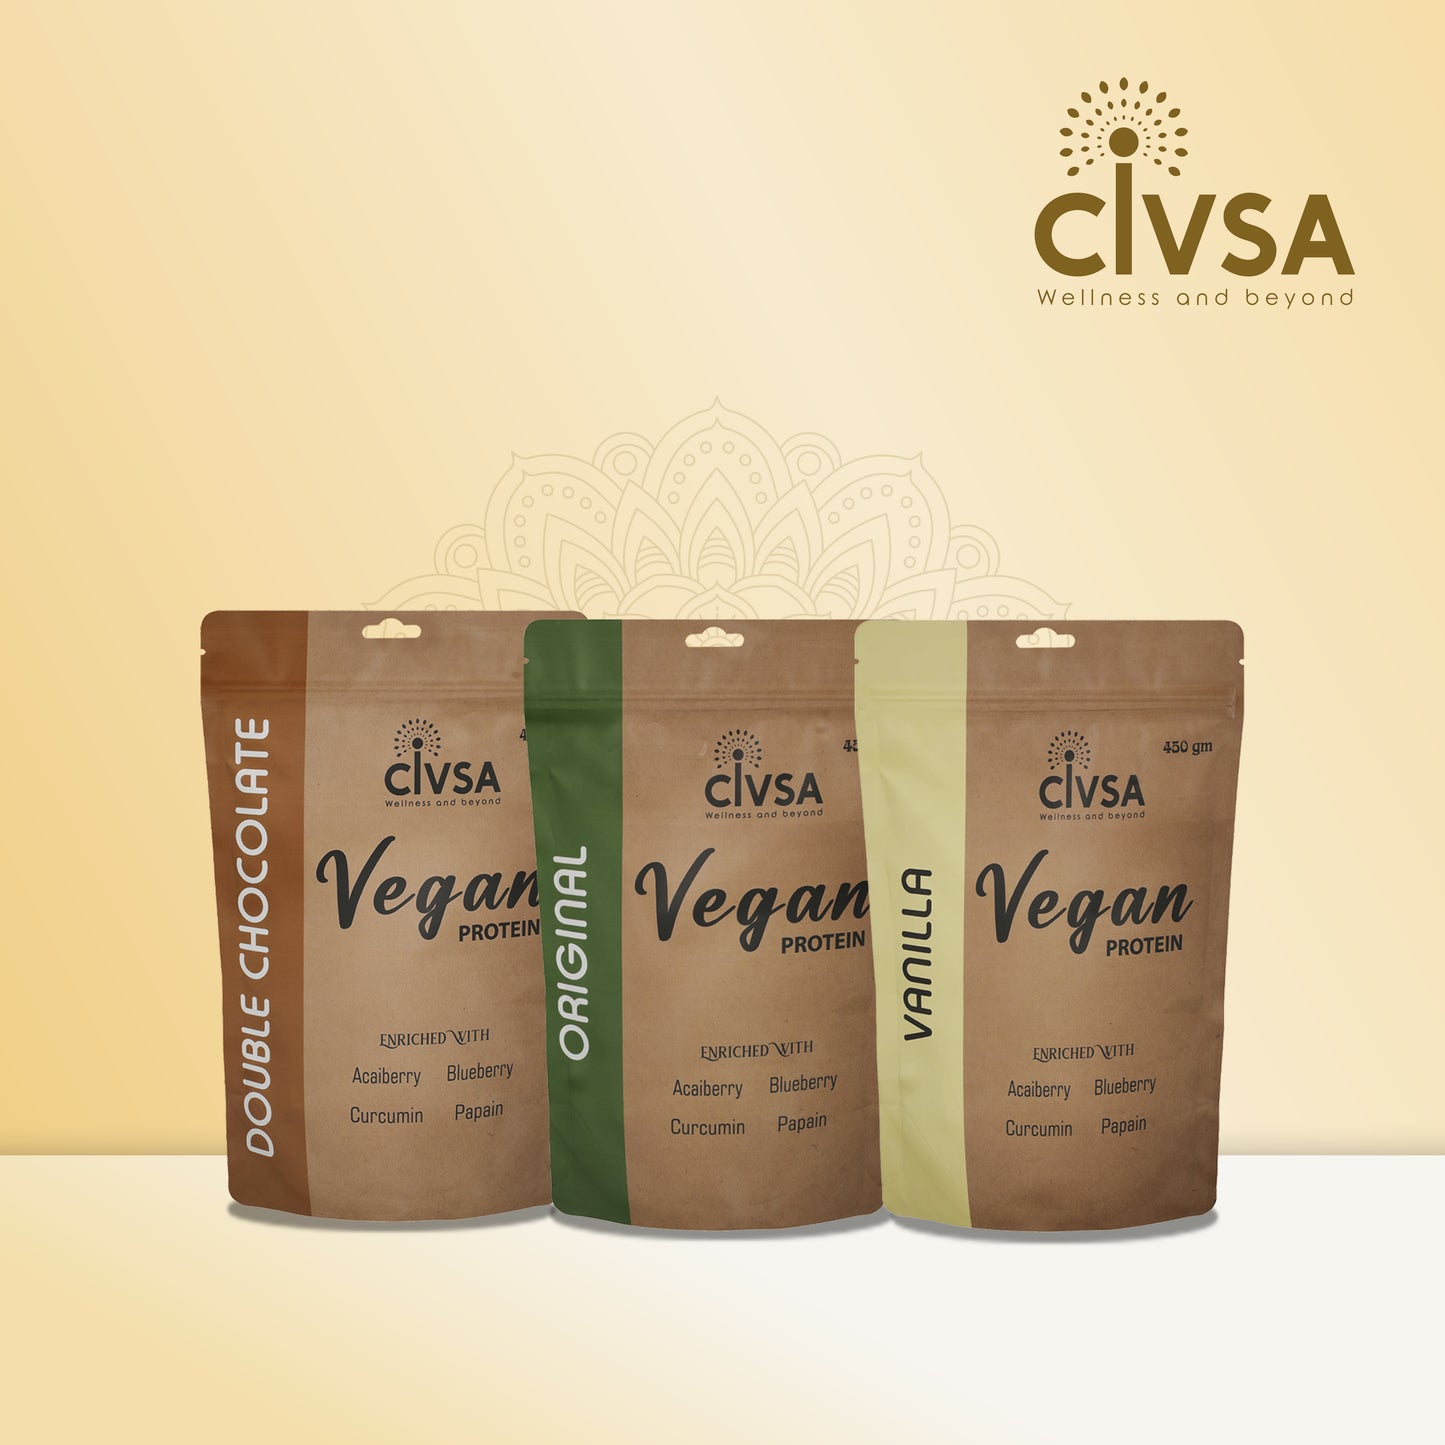 Civsa Vegan plant protein bundles